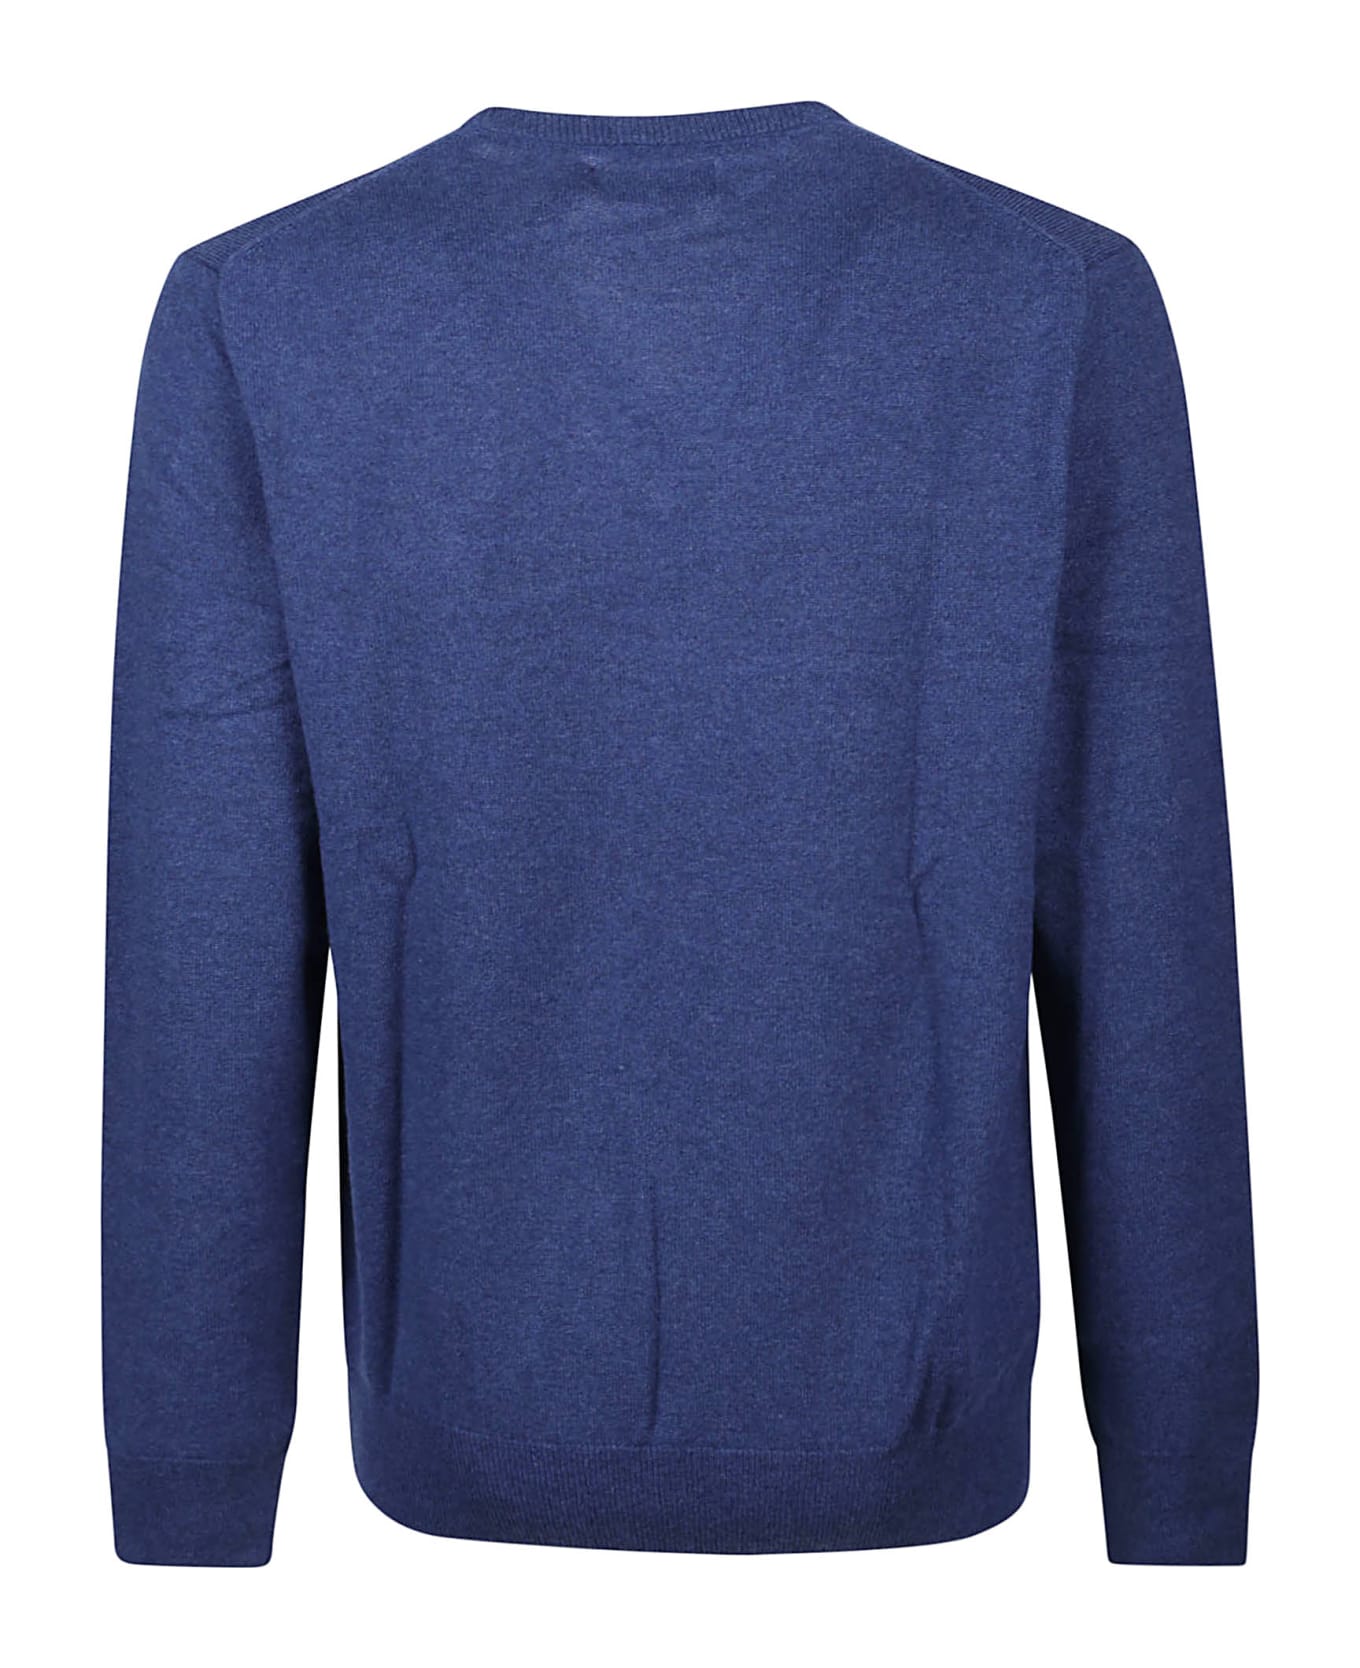 Polo Ralph Lauren Long Sleeve Sweater - Rustic Navy